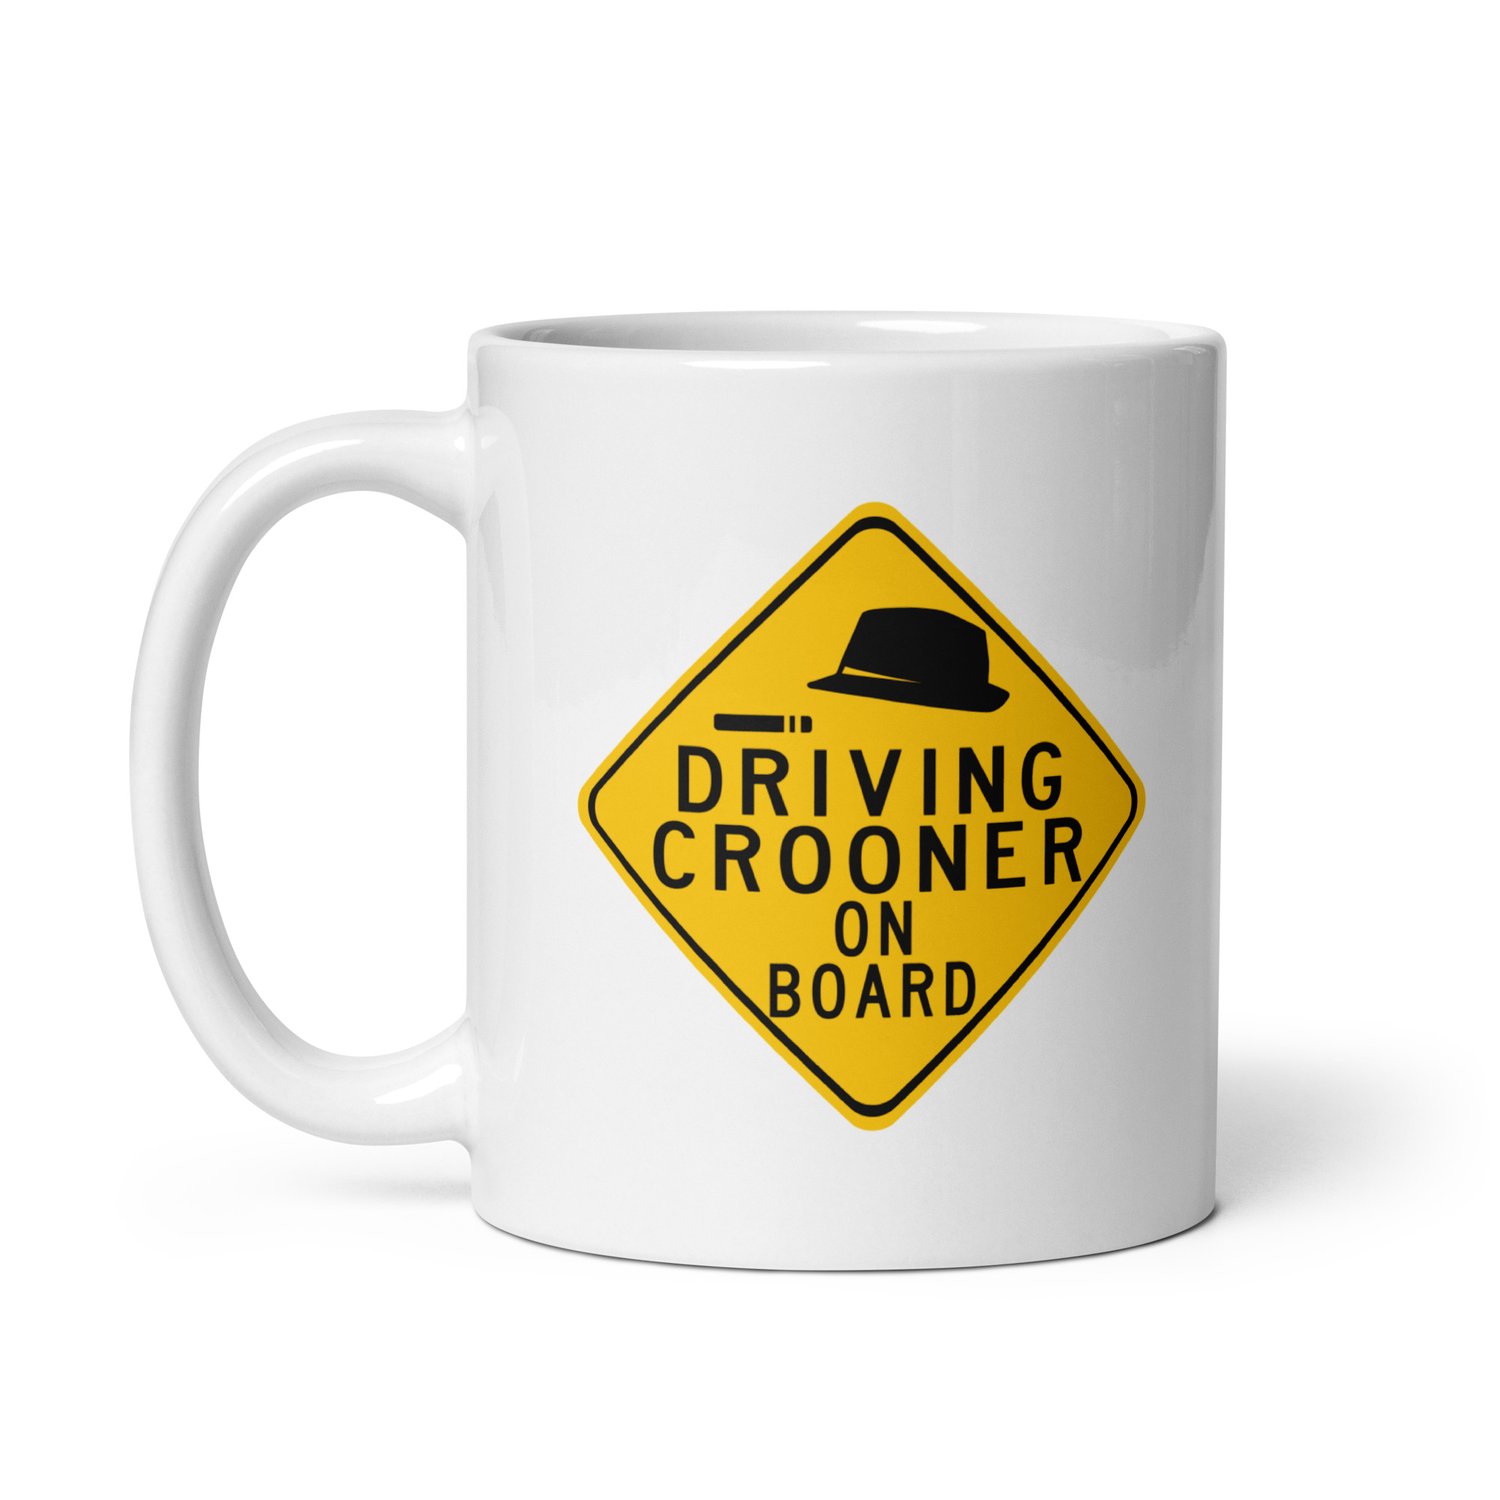 Image of Driving Crooner mug